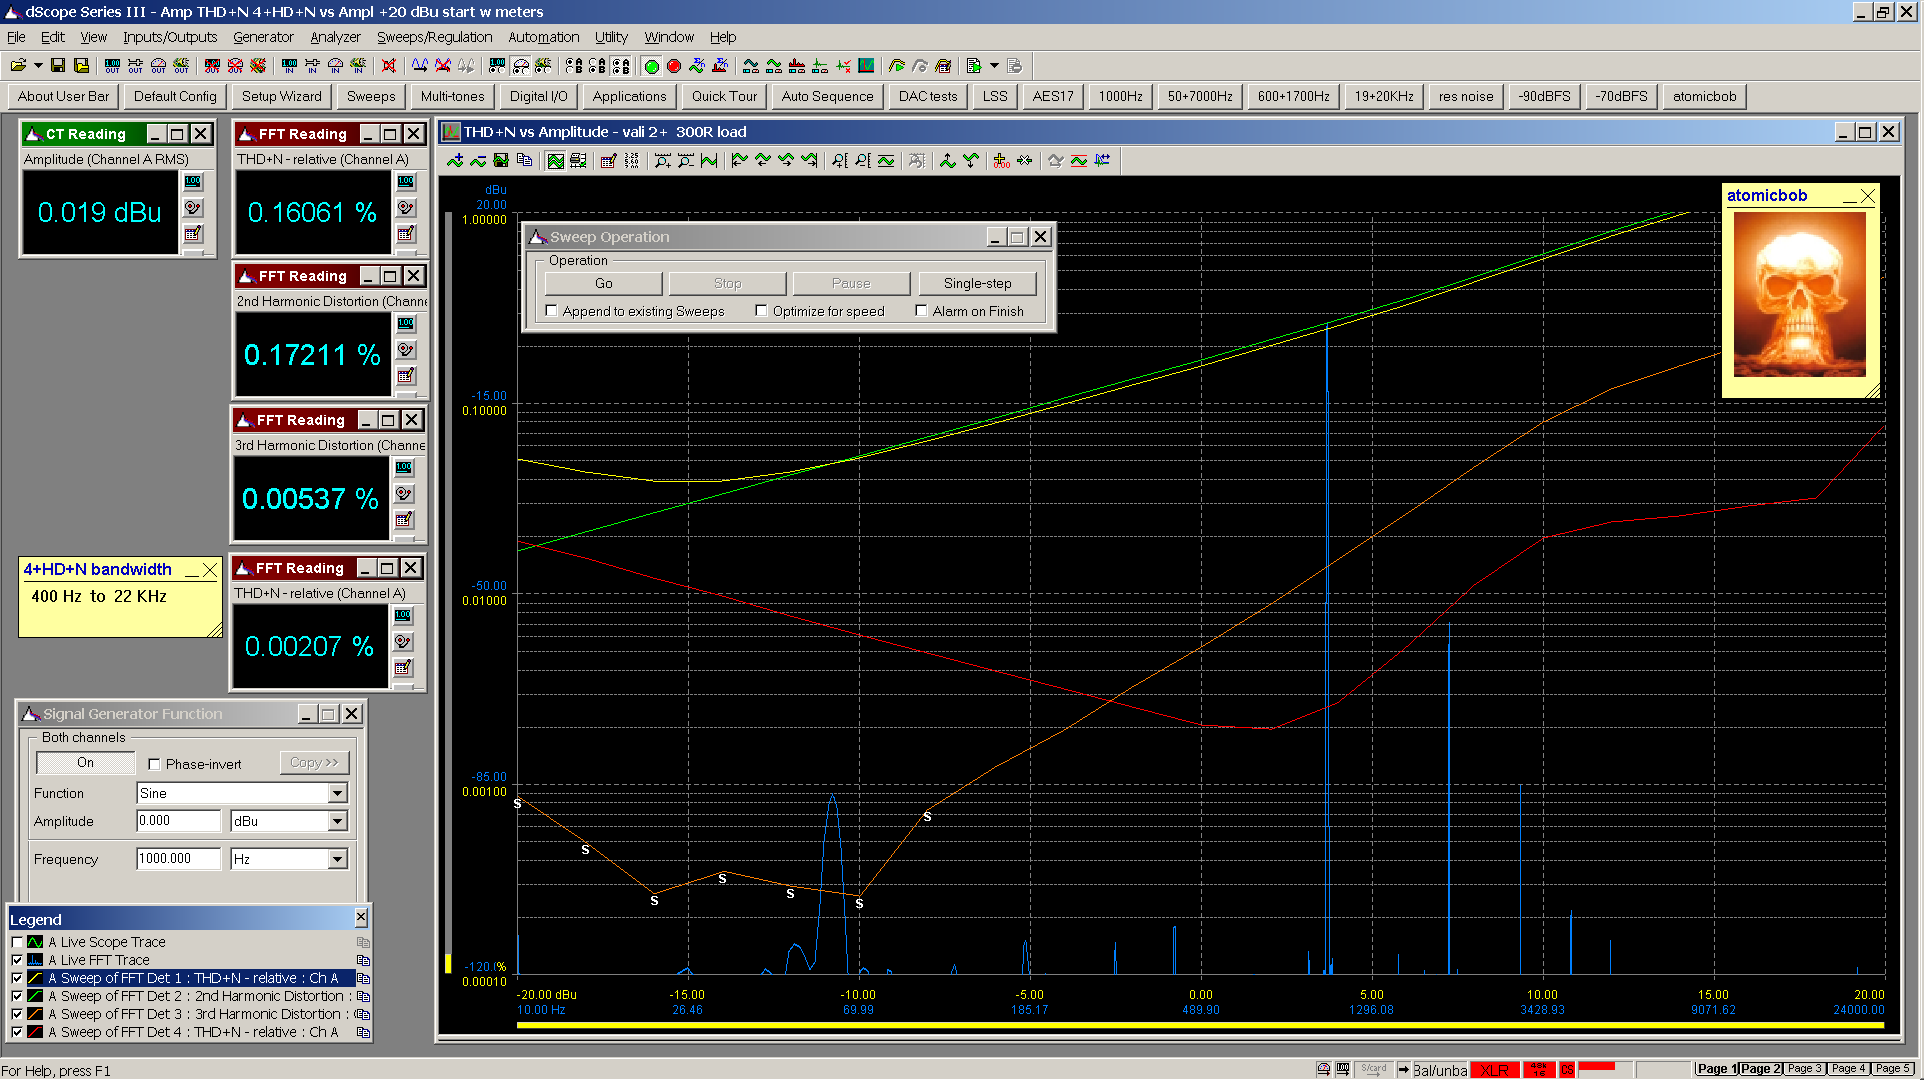 08 202200511-2 vali 2+ 1000 Hz distortion vs amp - 0 dB gain 4+HD+N 400Hz-20KHz - 300R.png